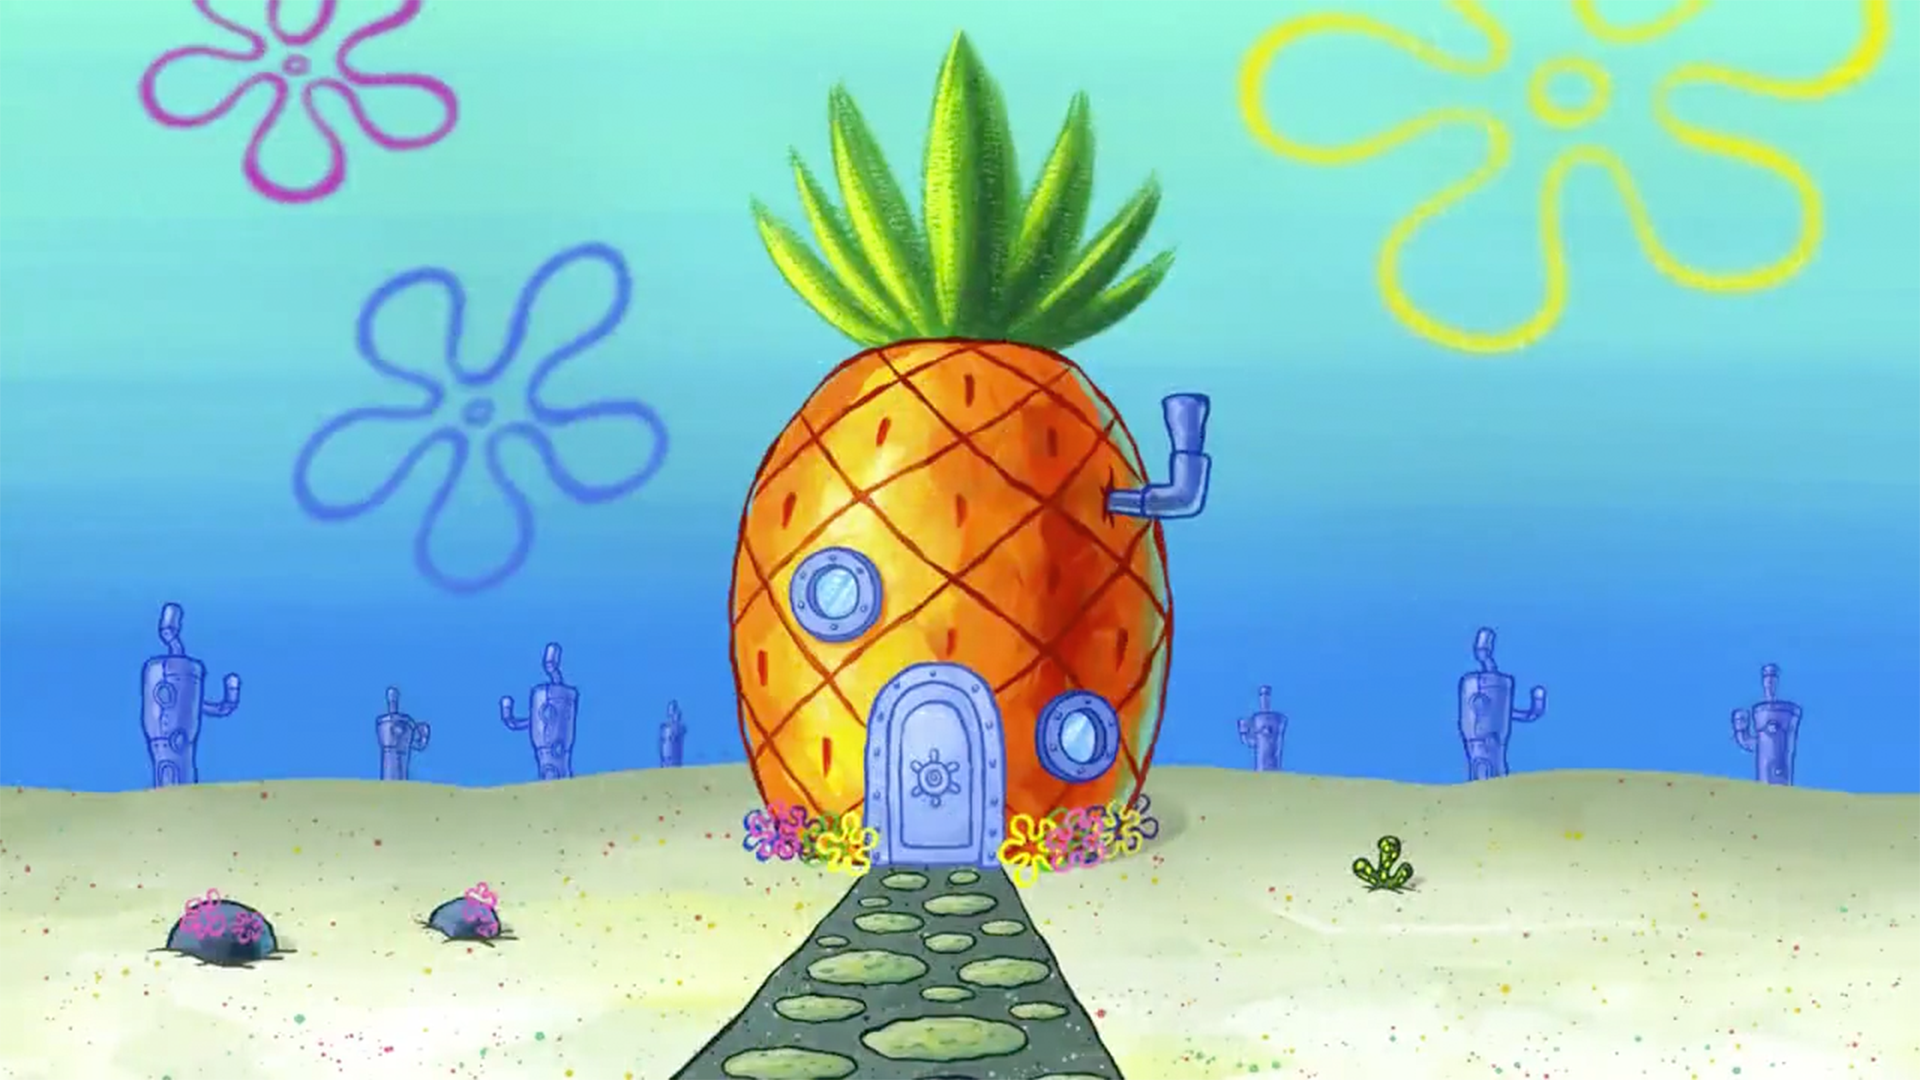 Spongebob's house